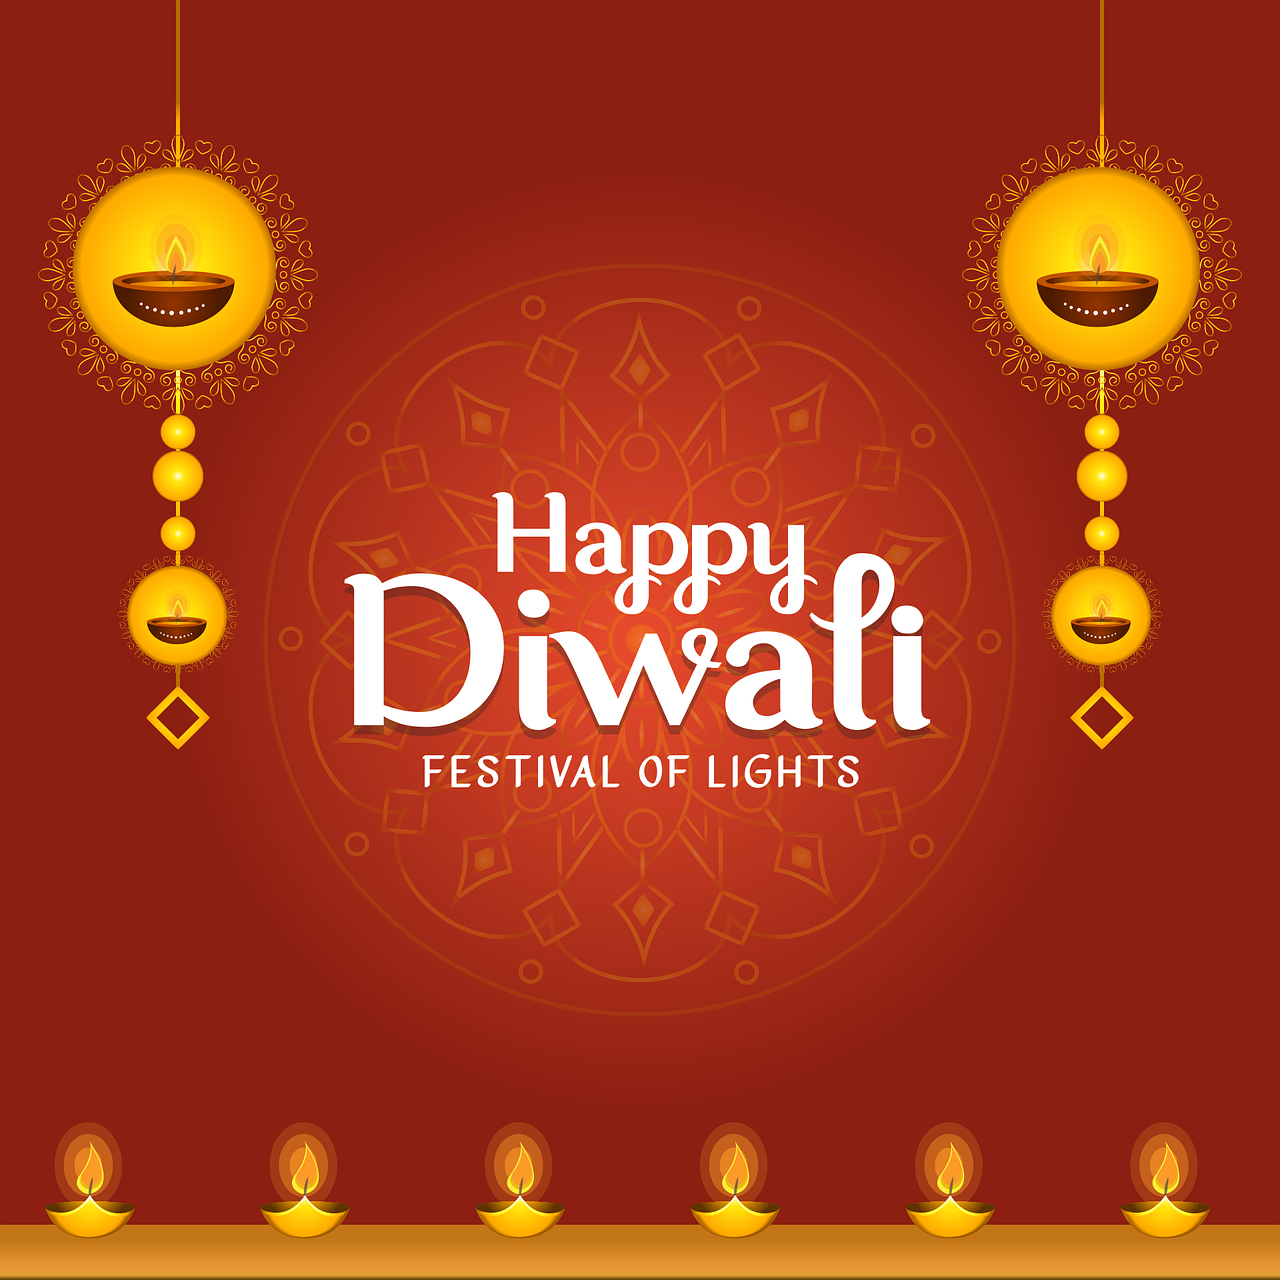 happy diwali festival of lights, digital art, detailed glowing red implants, poster illustration, yellow lights, half image